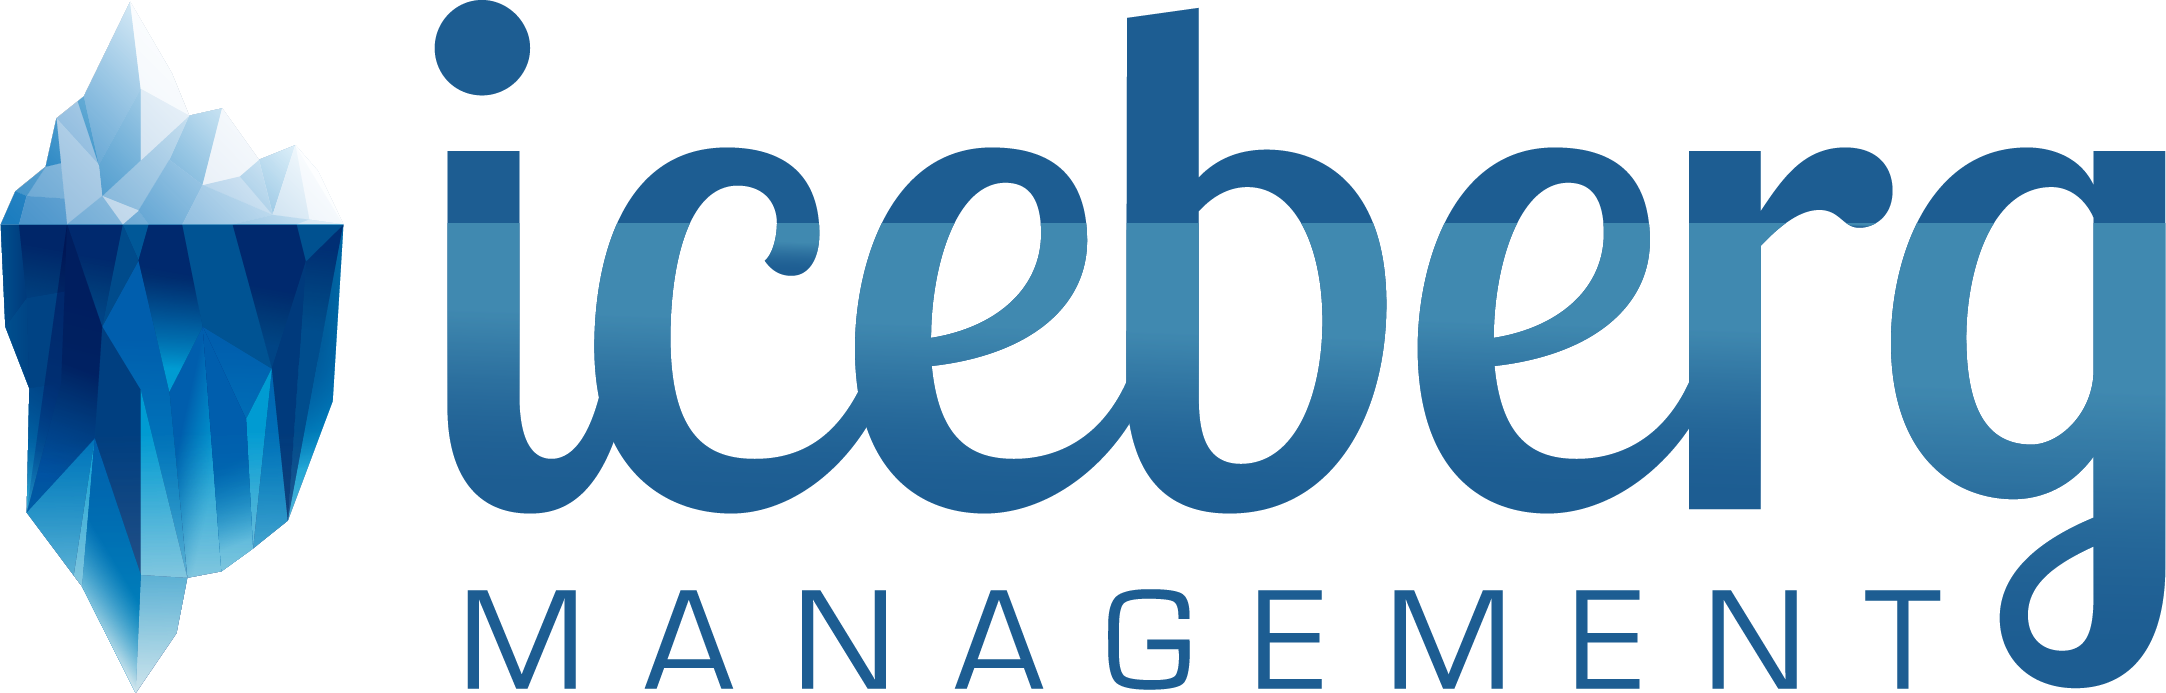 logo-iceberg-management-2019-fond-blanc.png